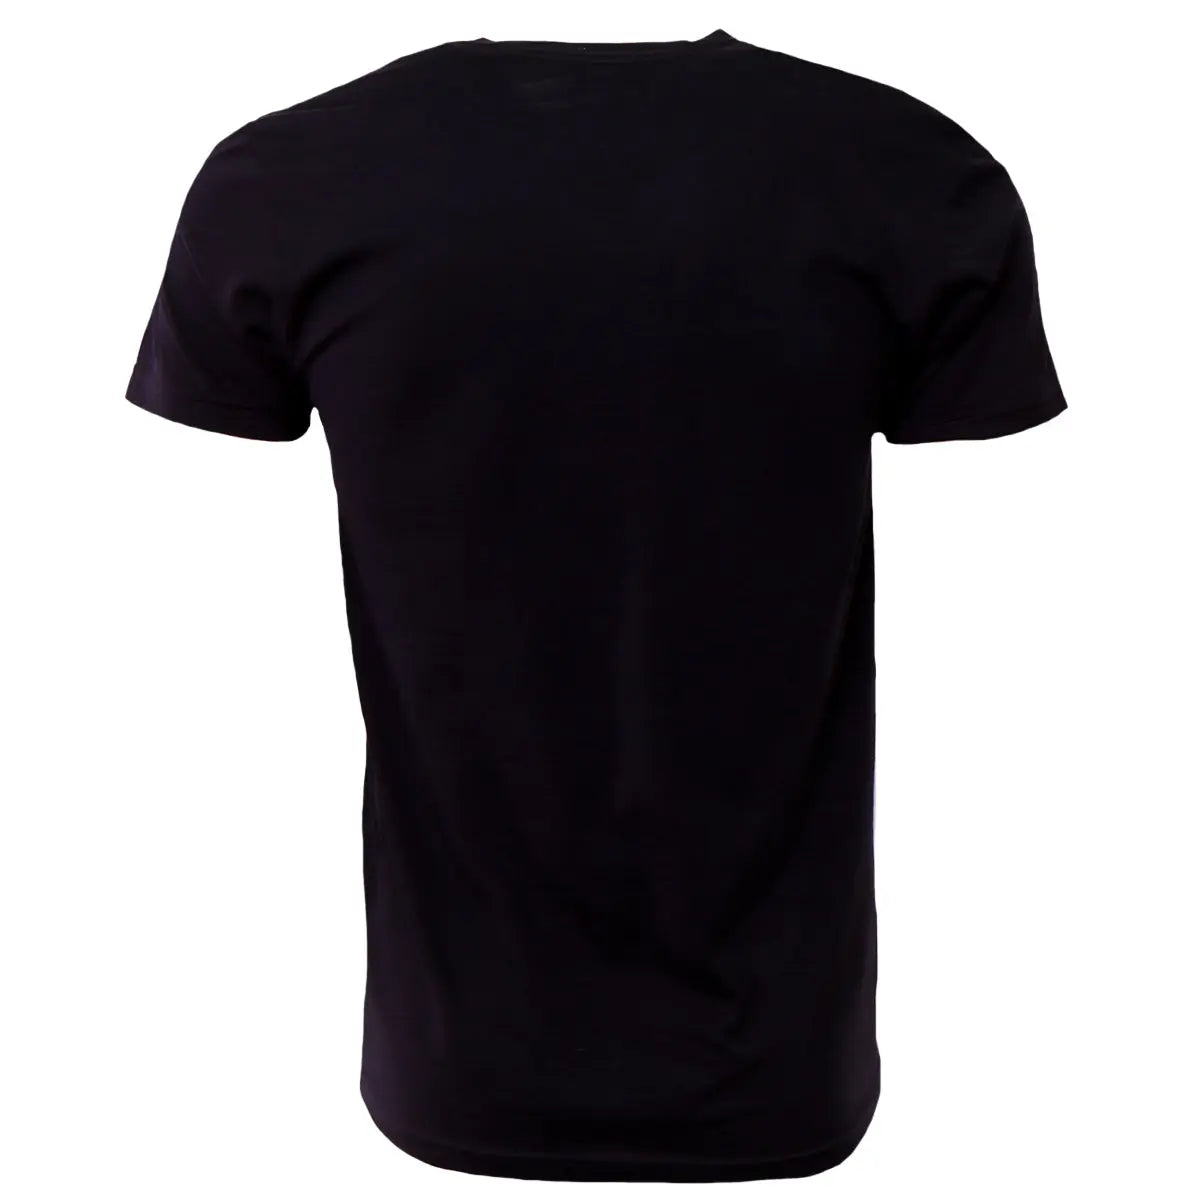 Forza Sports "Slither" MMA T-Shirt - Black Forza Sports